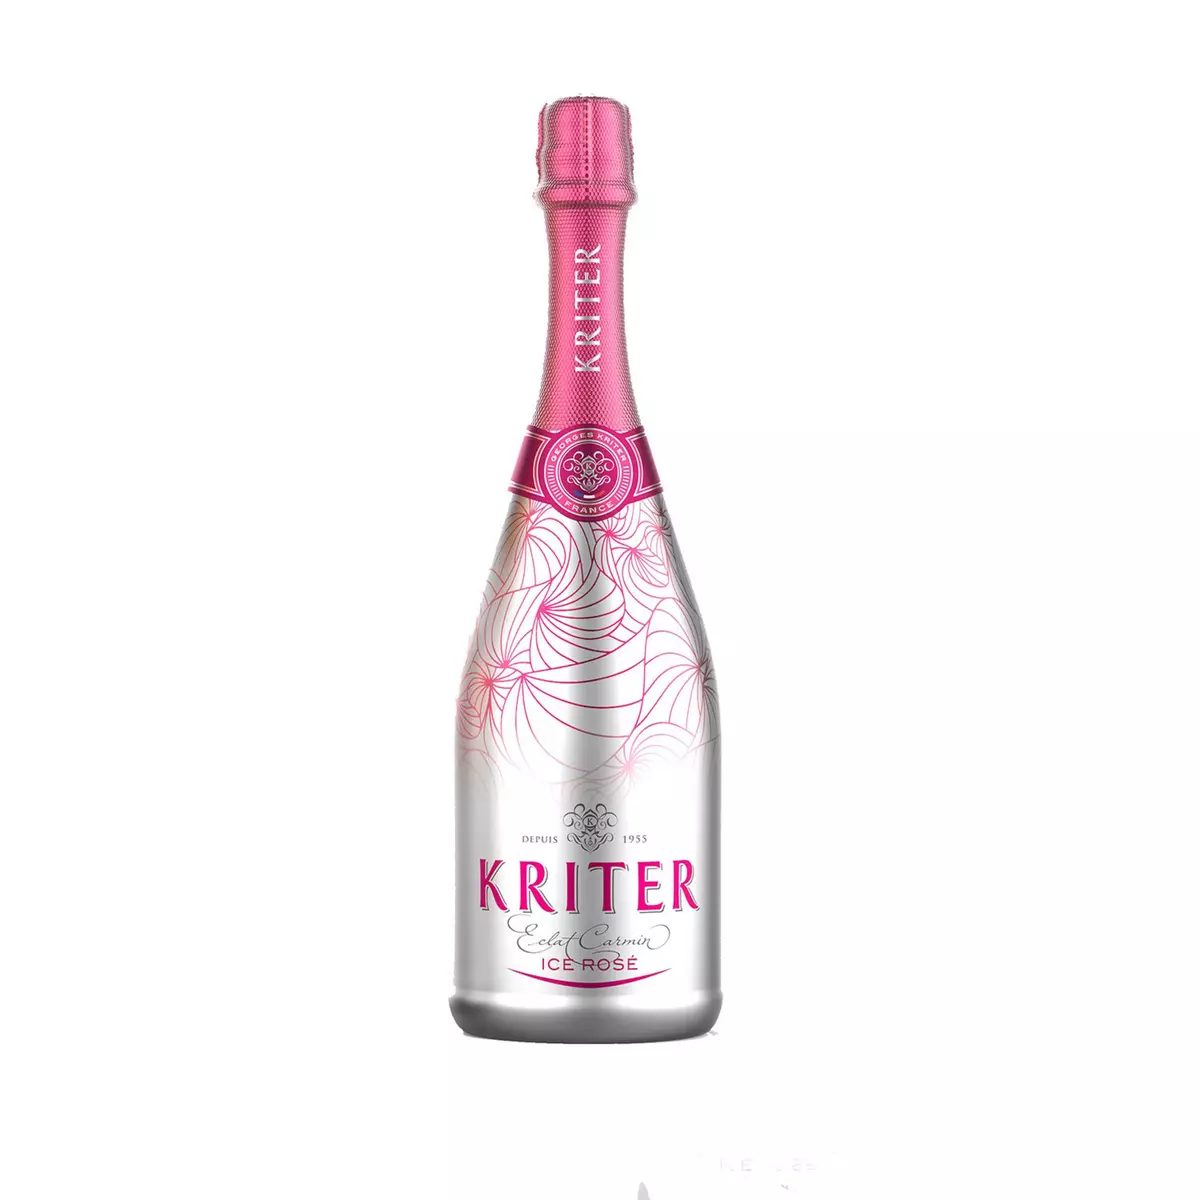 KRITER Vin effervescent Ice rosé 75cl